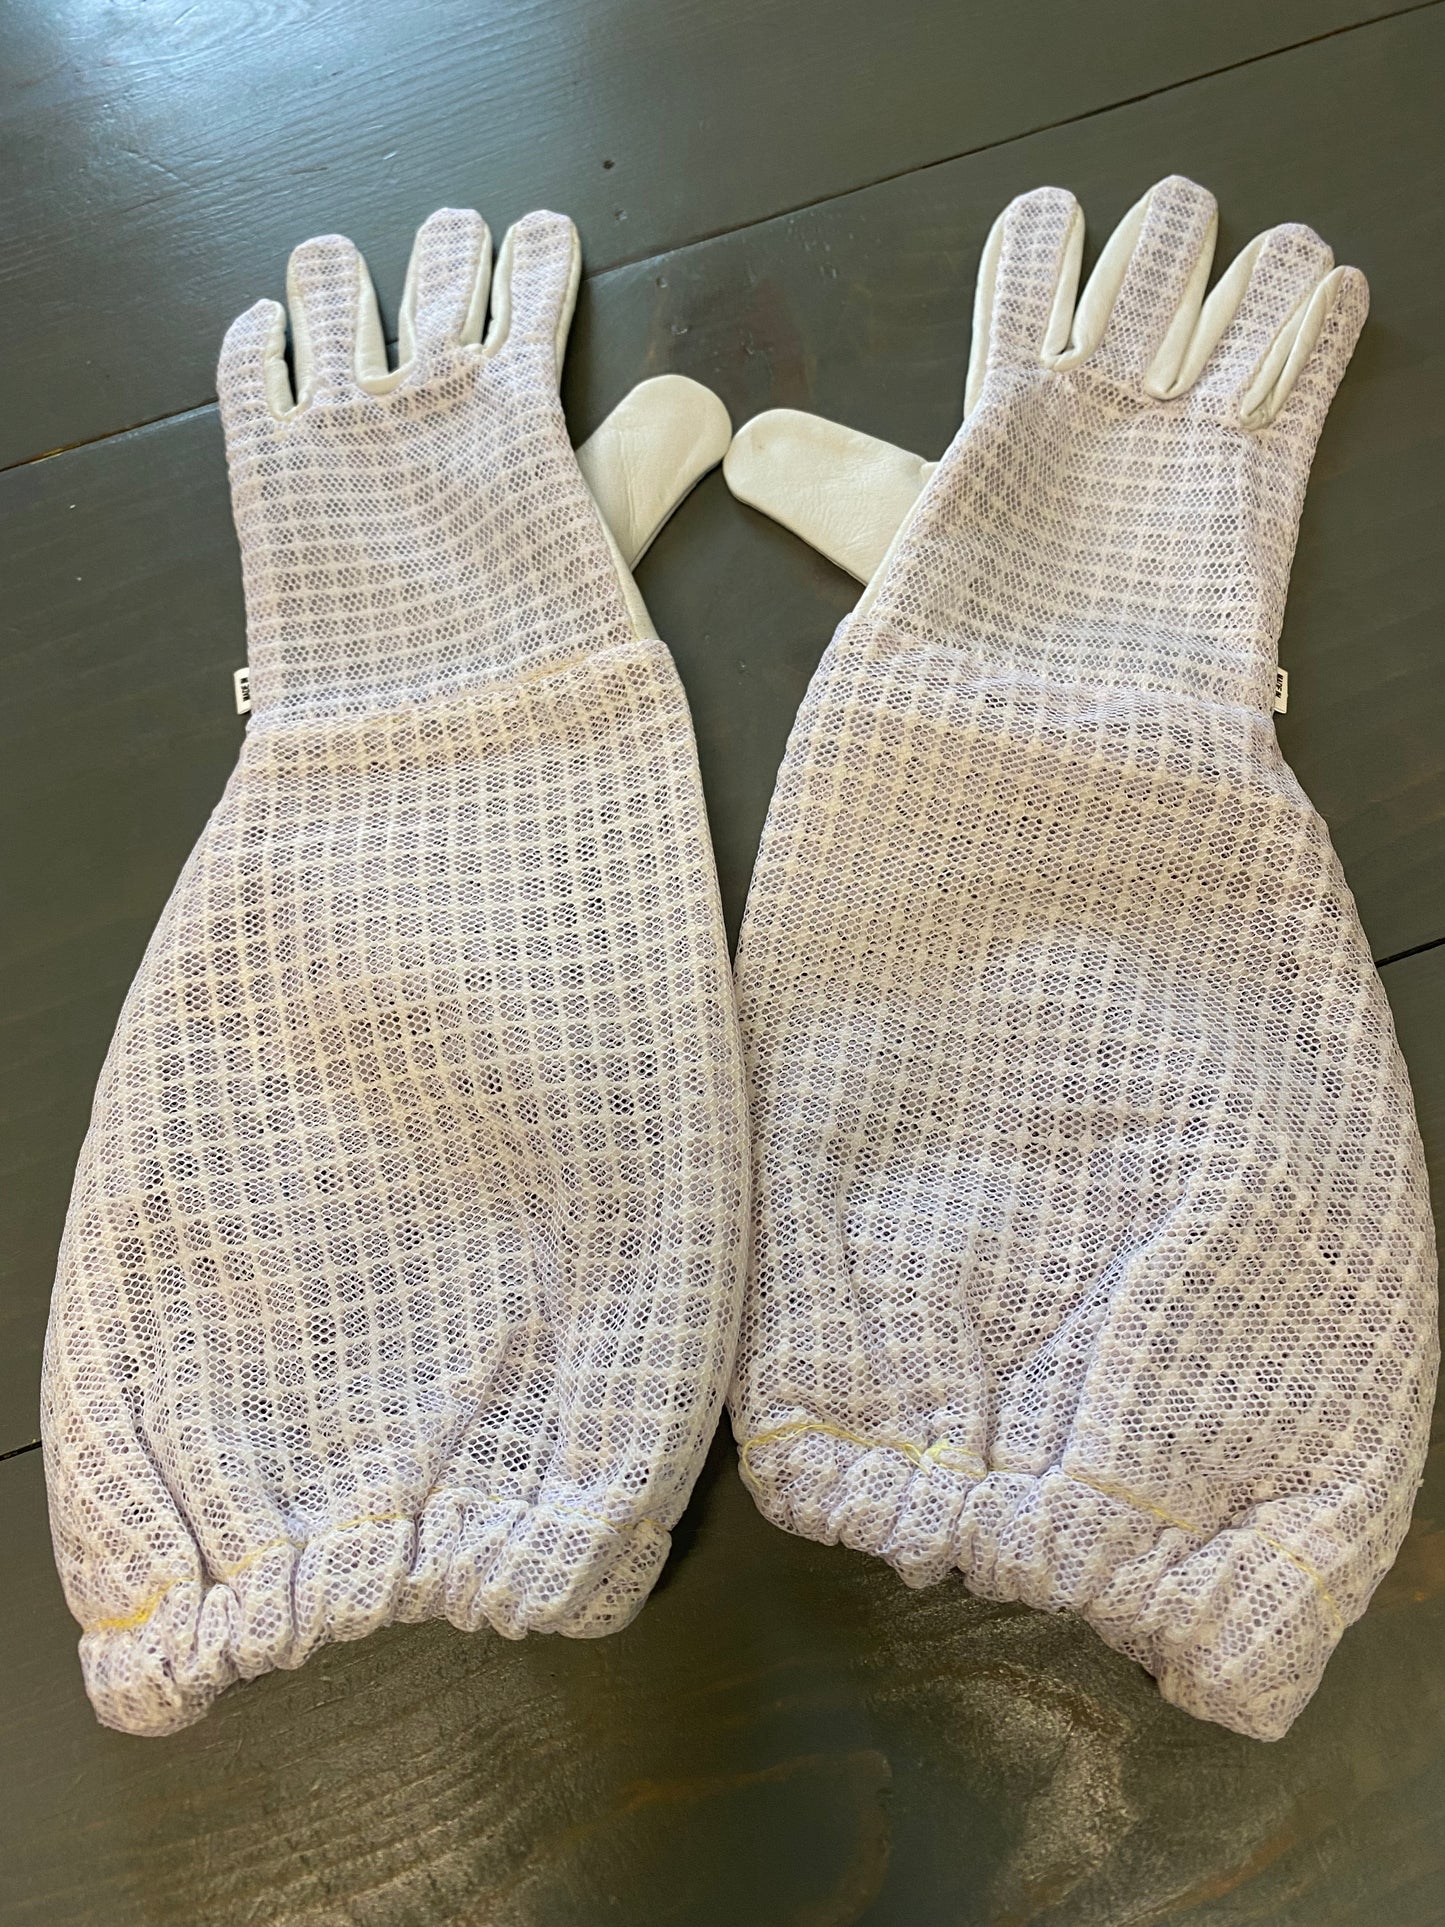 Adult vented gloves